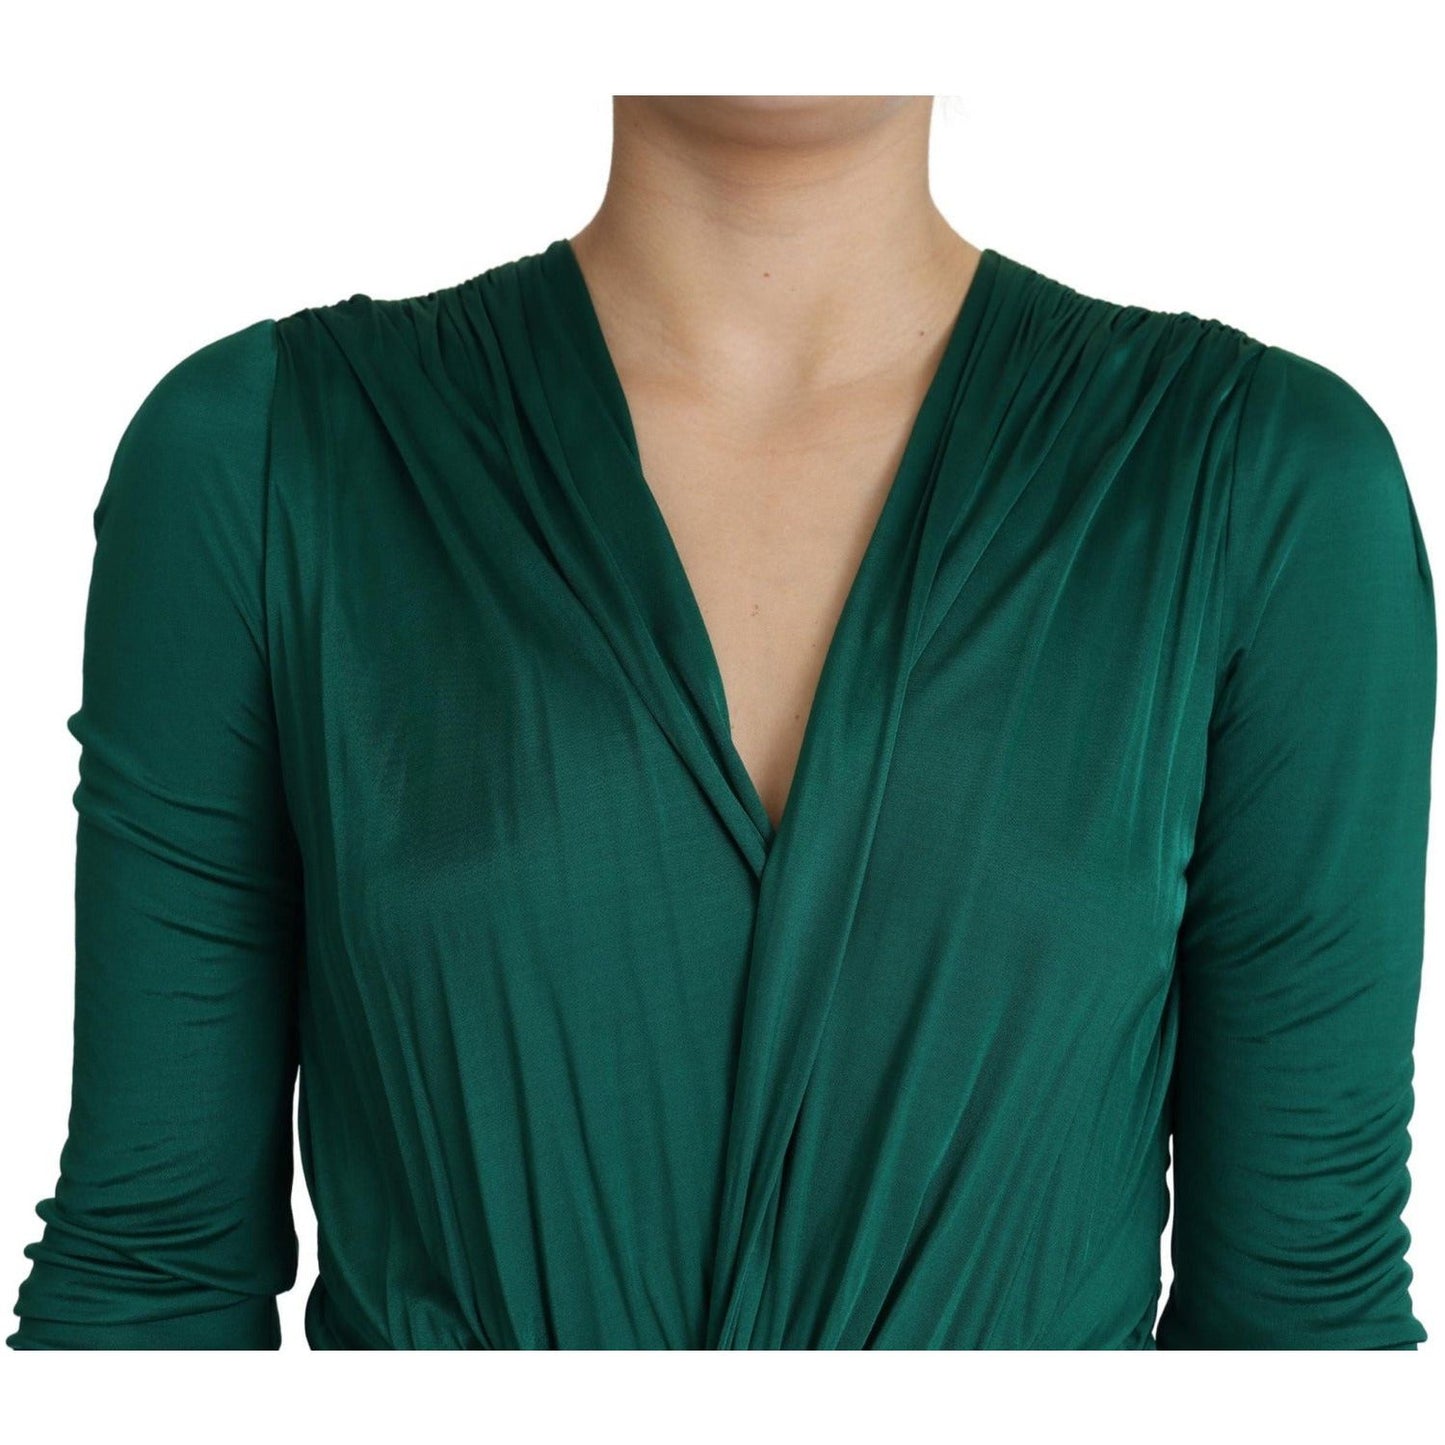 Dolce & Gabbana Emerald Elegance Bodycon Midi Dress green-fitted-silhouette-midi-viscose-dress IMG_9482-scaled-c9fb6a7c-a58.jpg